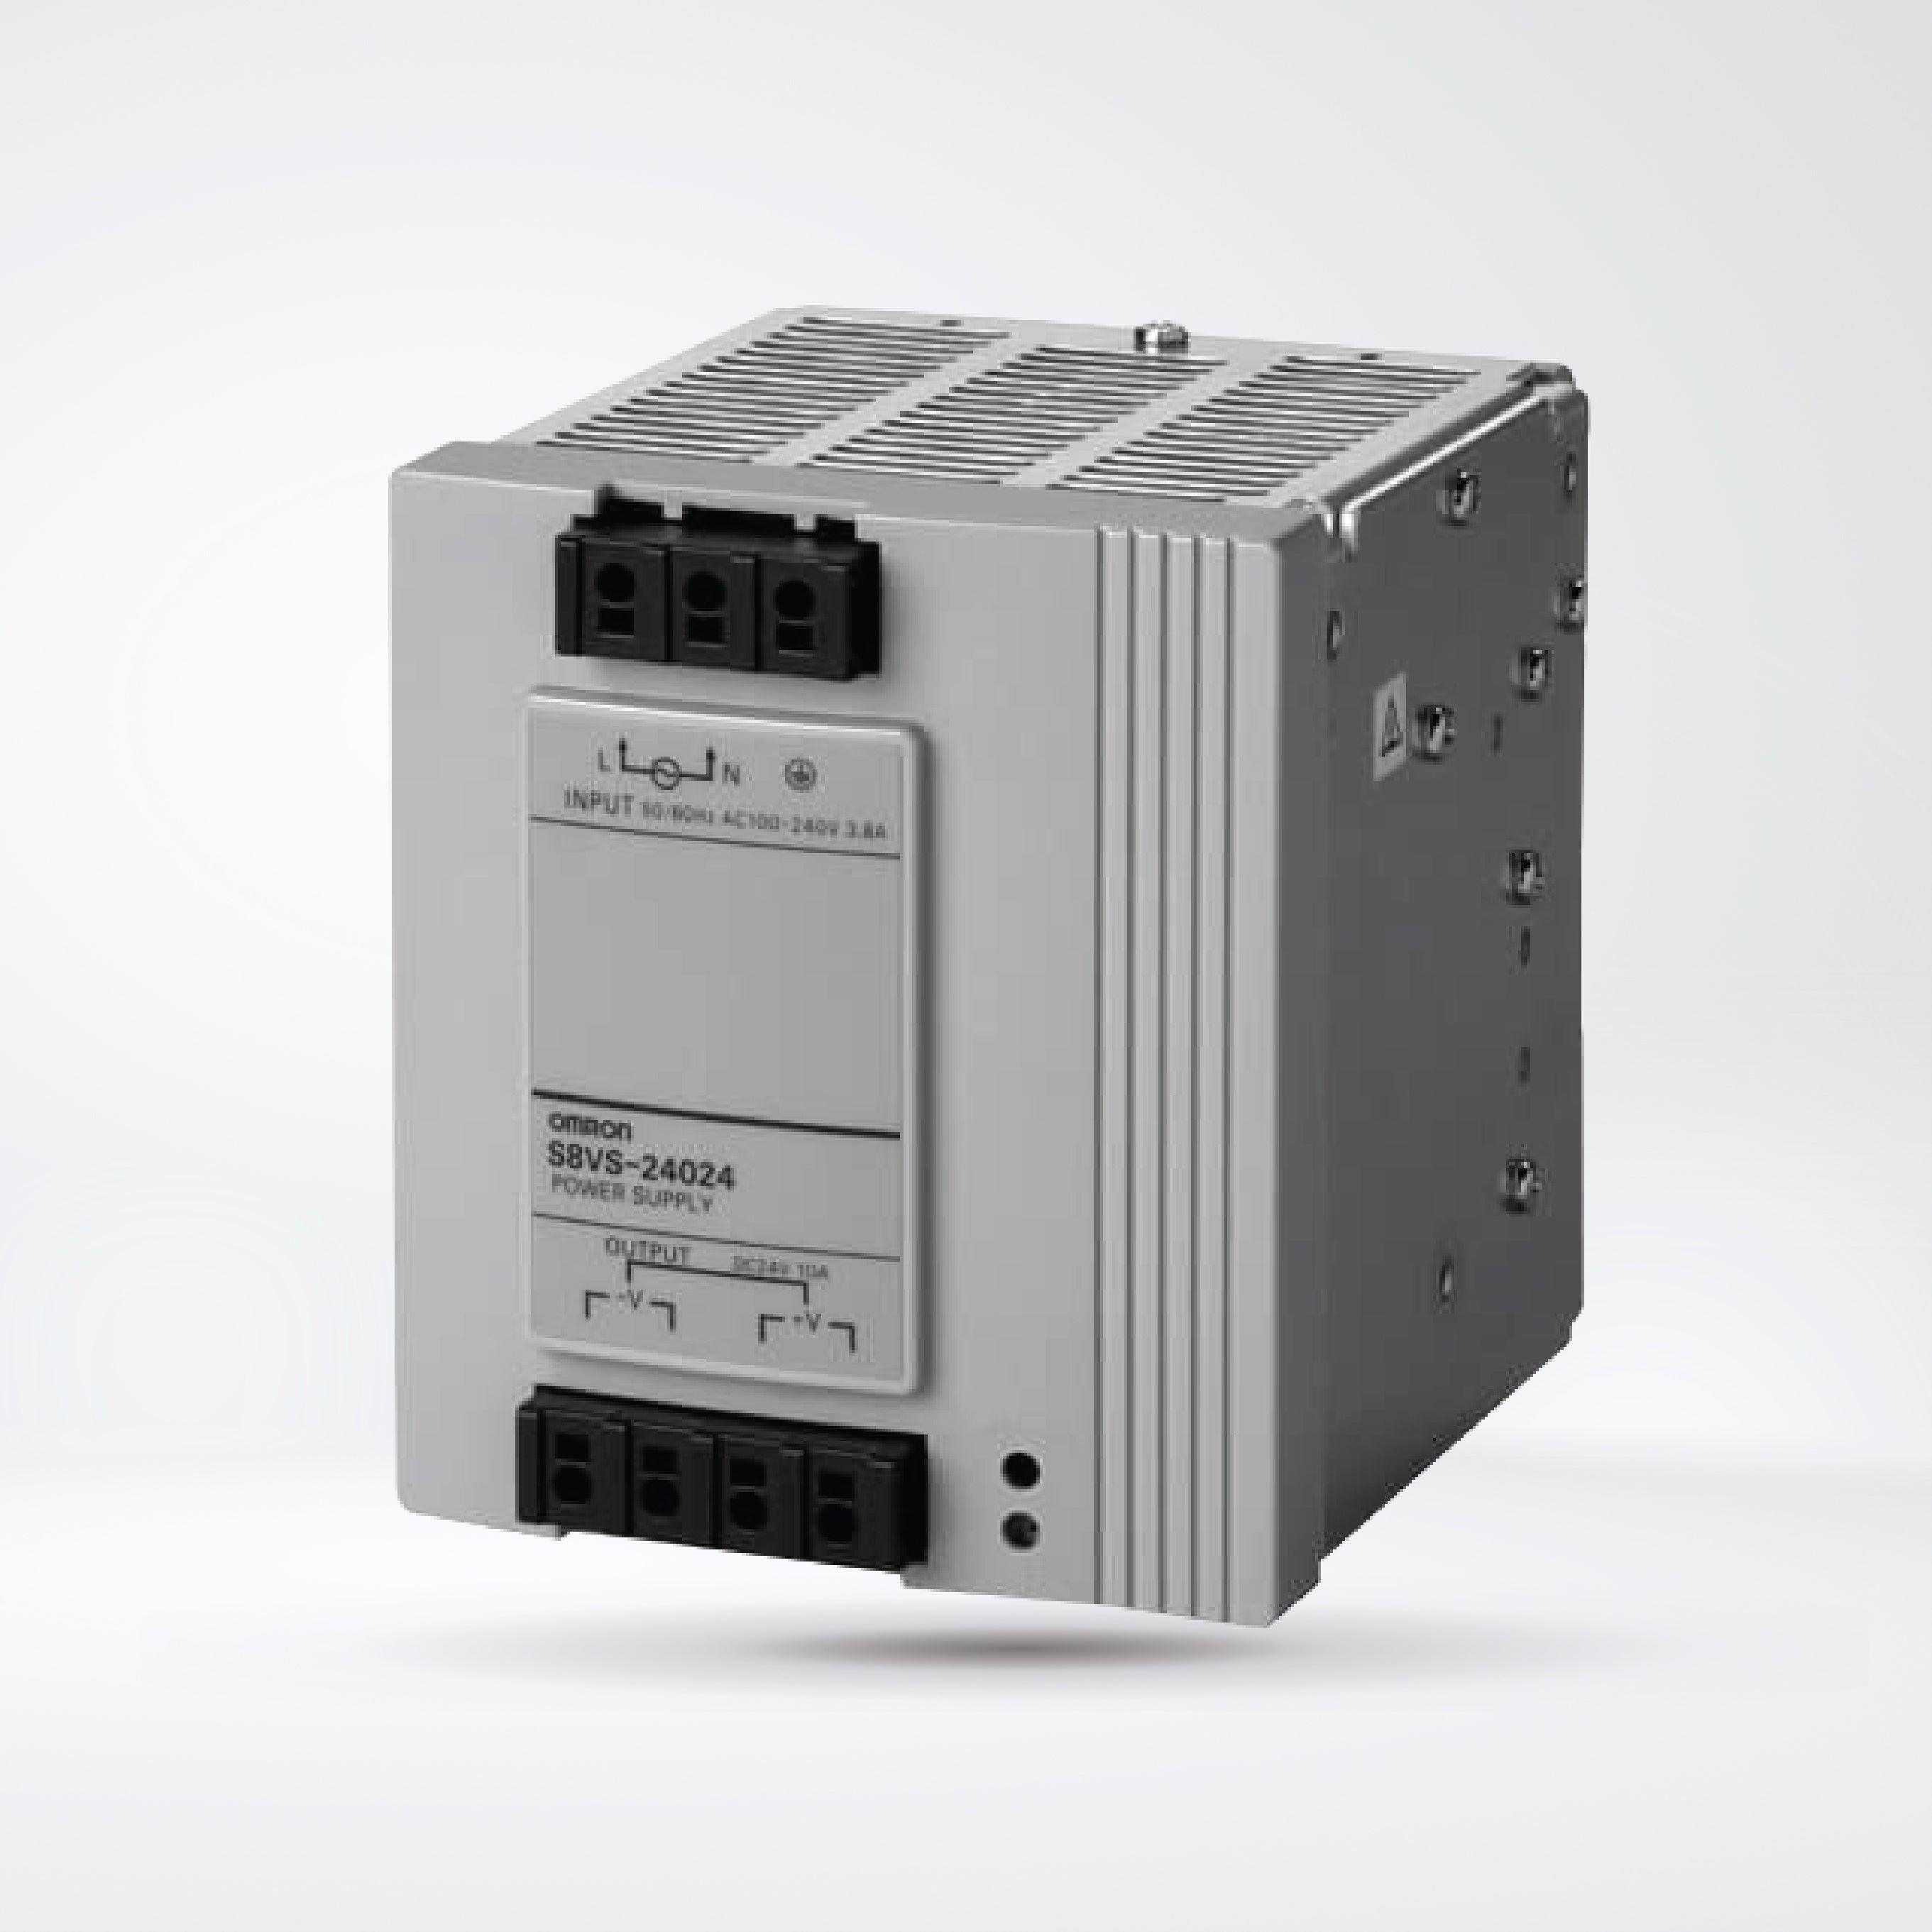 S8VS-24024 Power supply with Screw Terminal Blocks, 240 W, 24 VDC - Riverplus